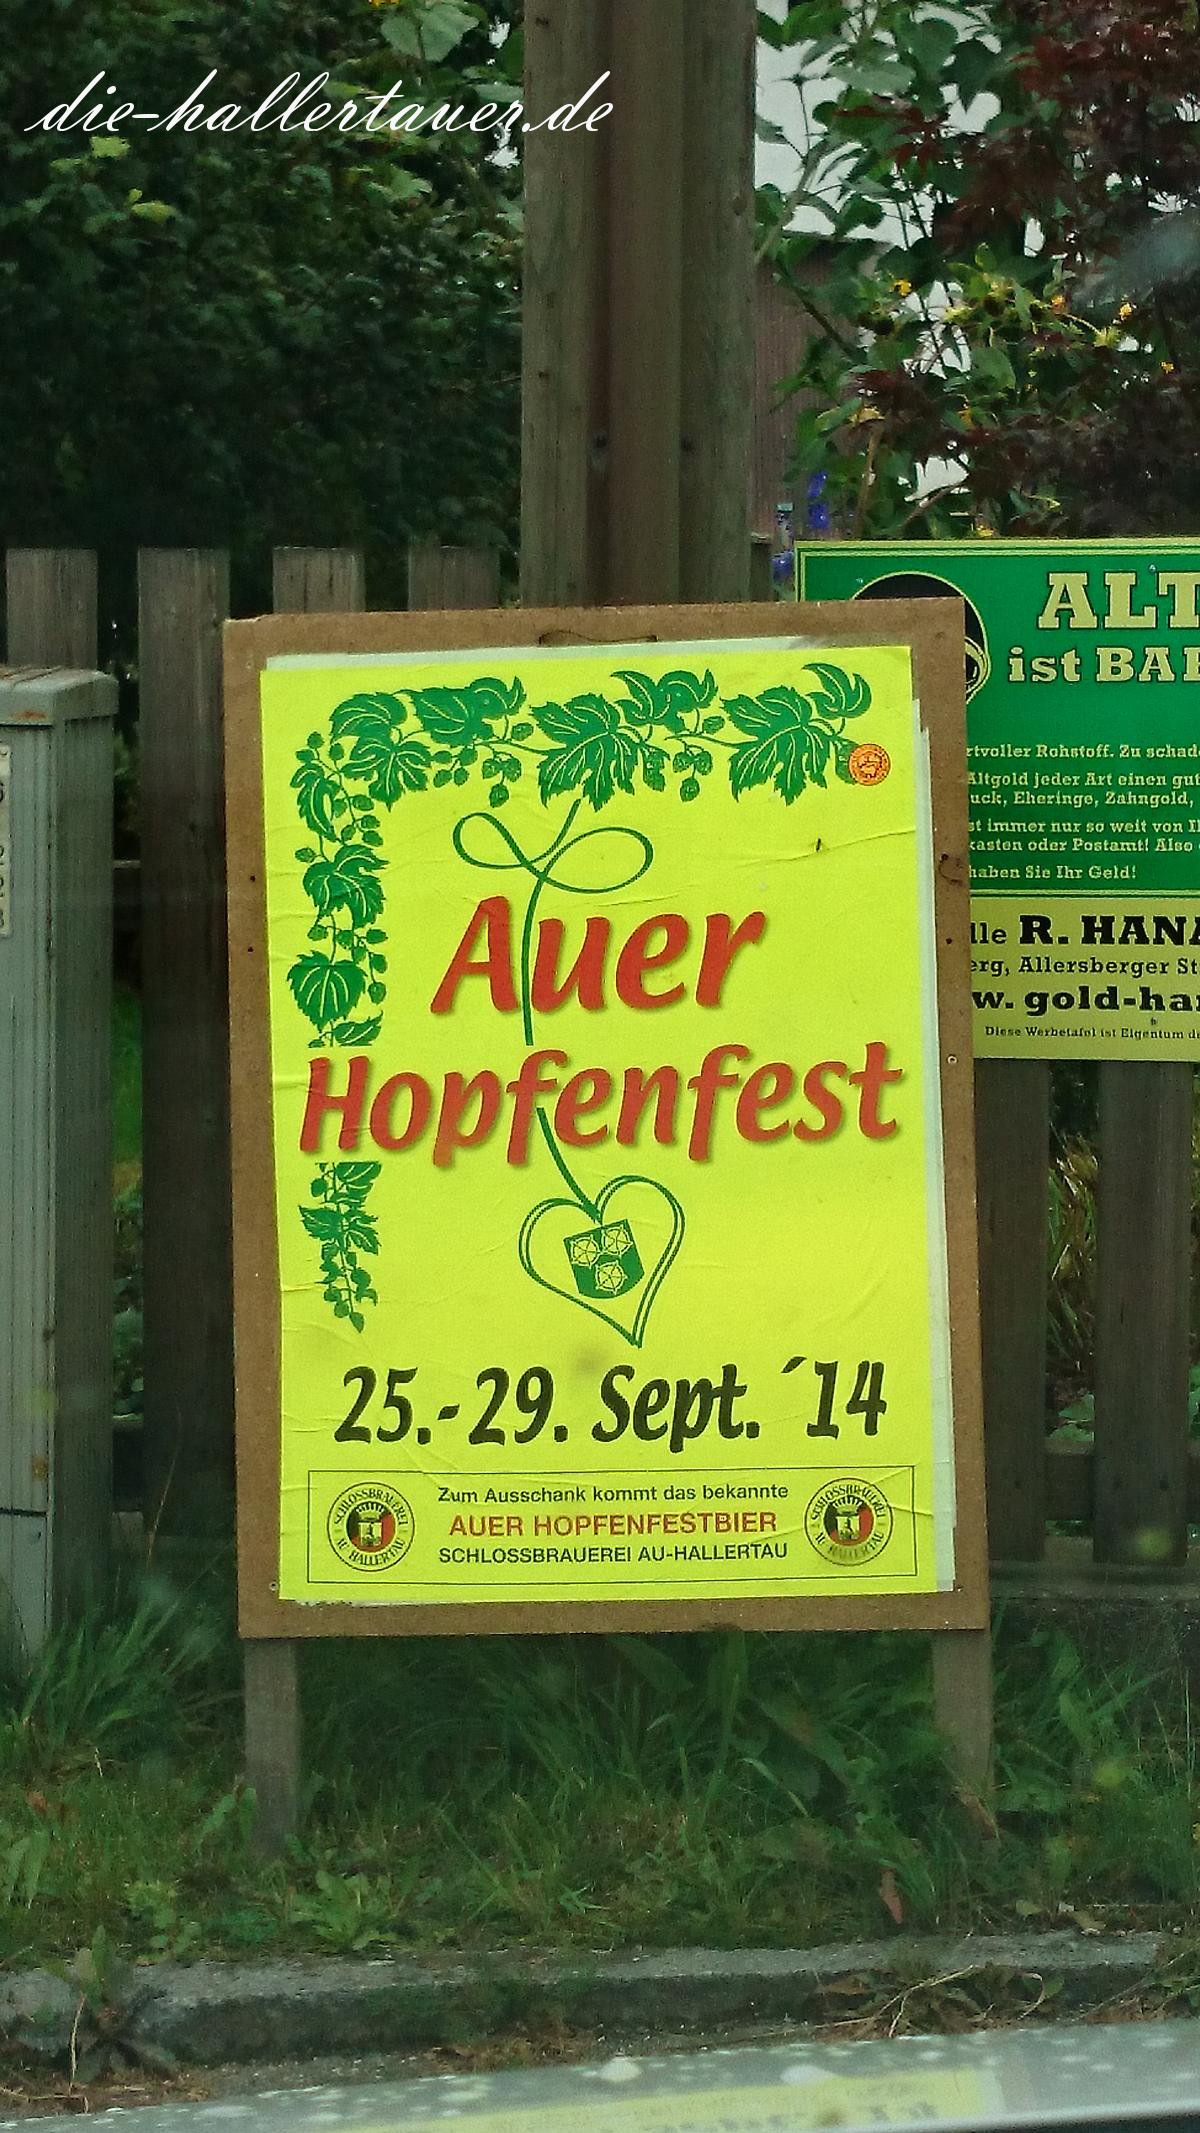 Auer Hopfenfest